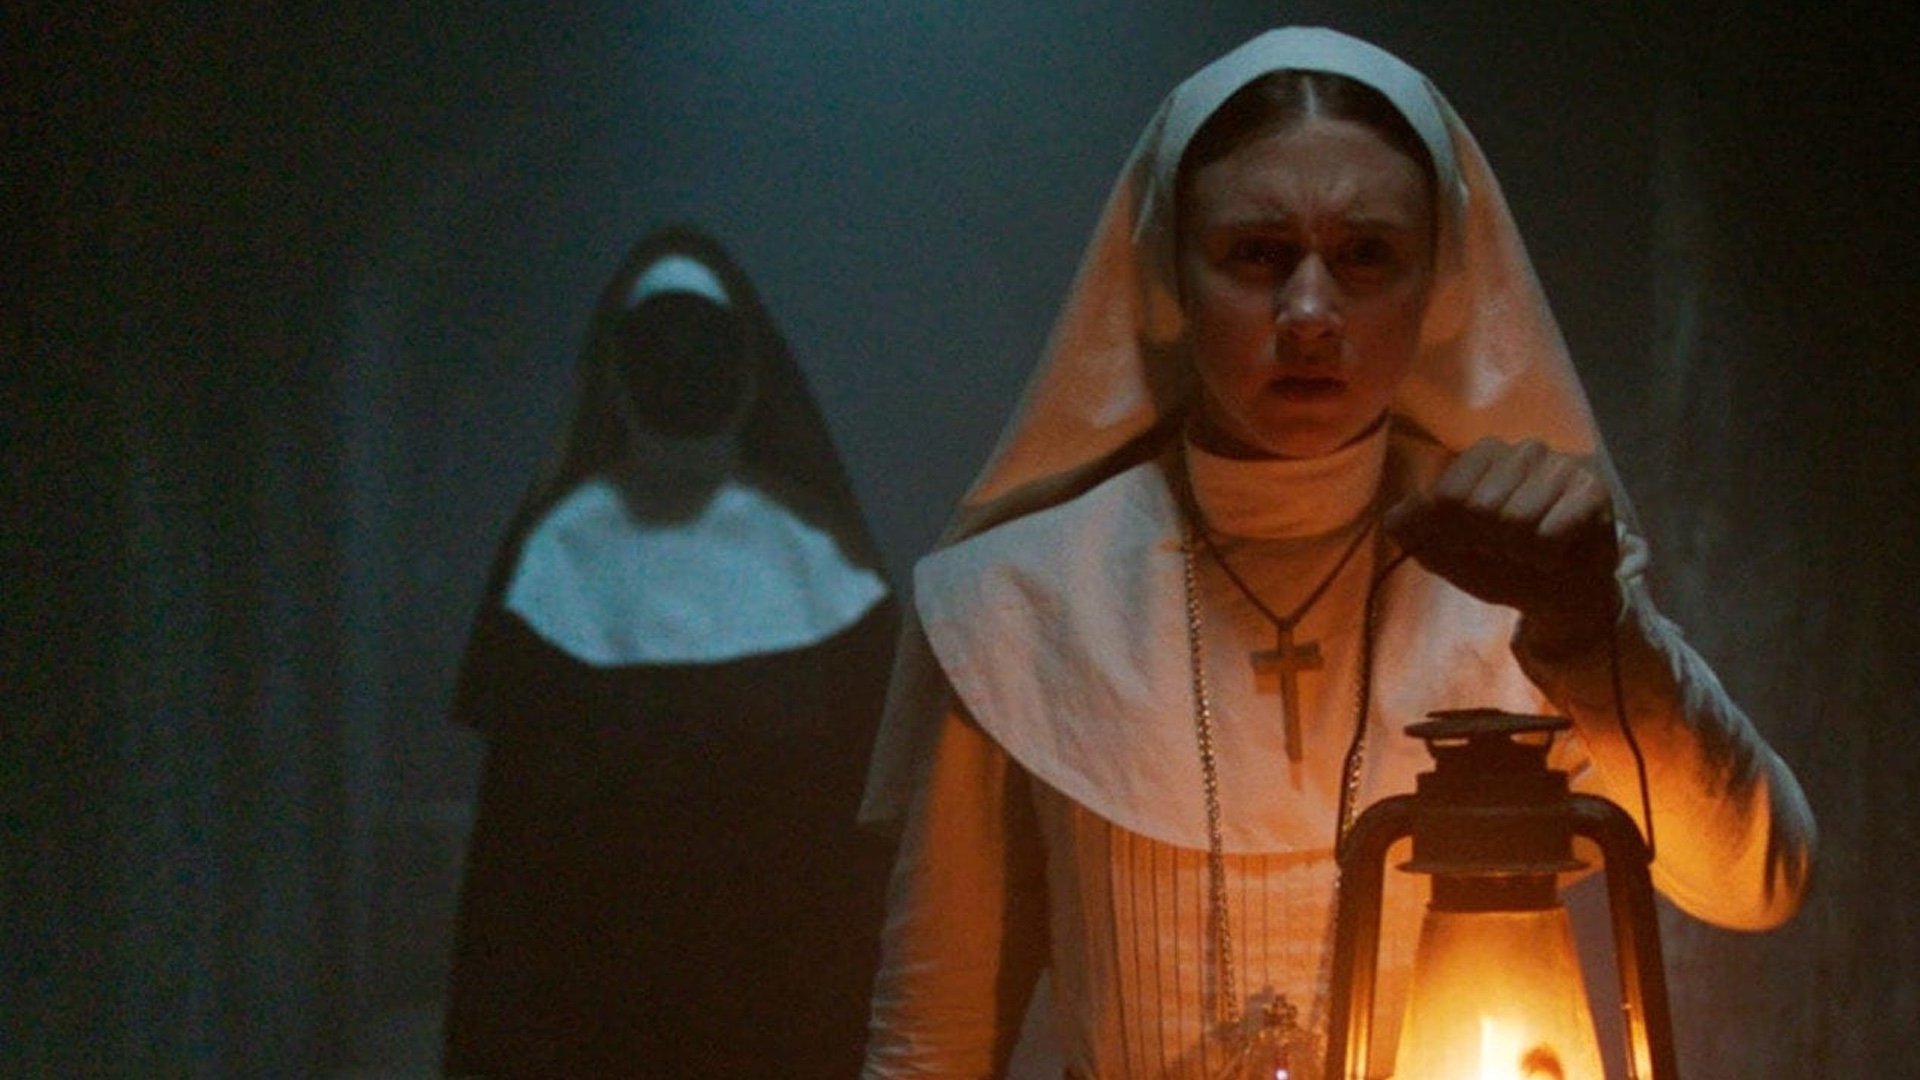 the nun 2 movie review essay